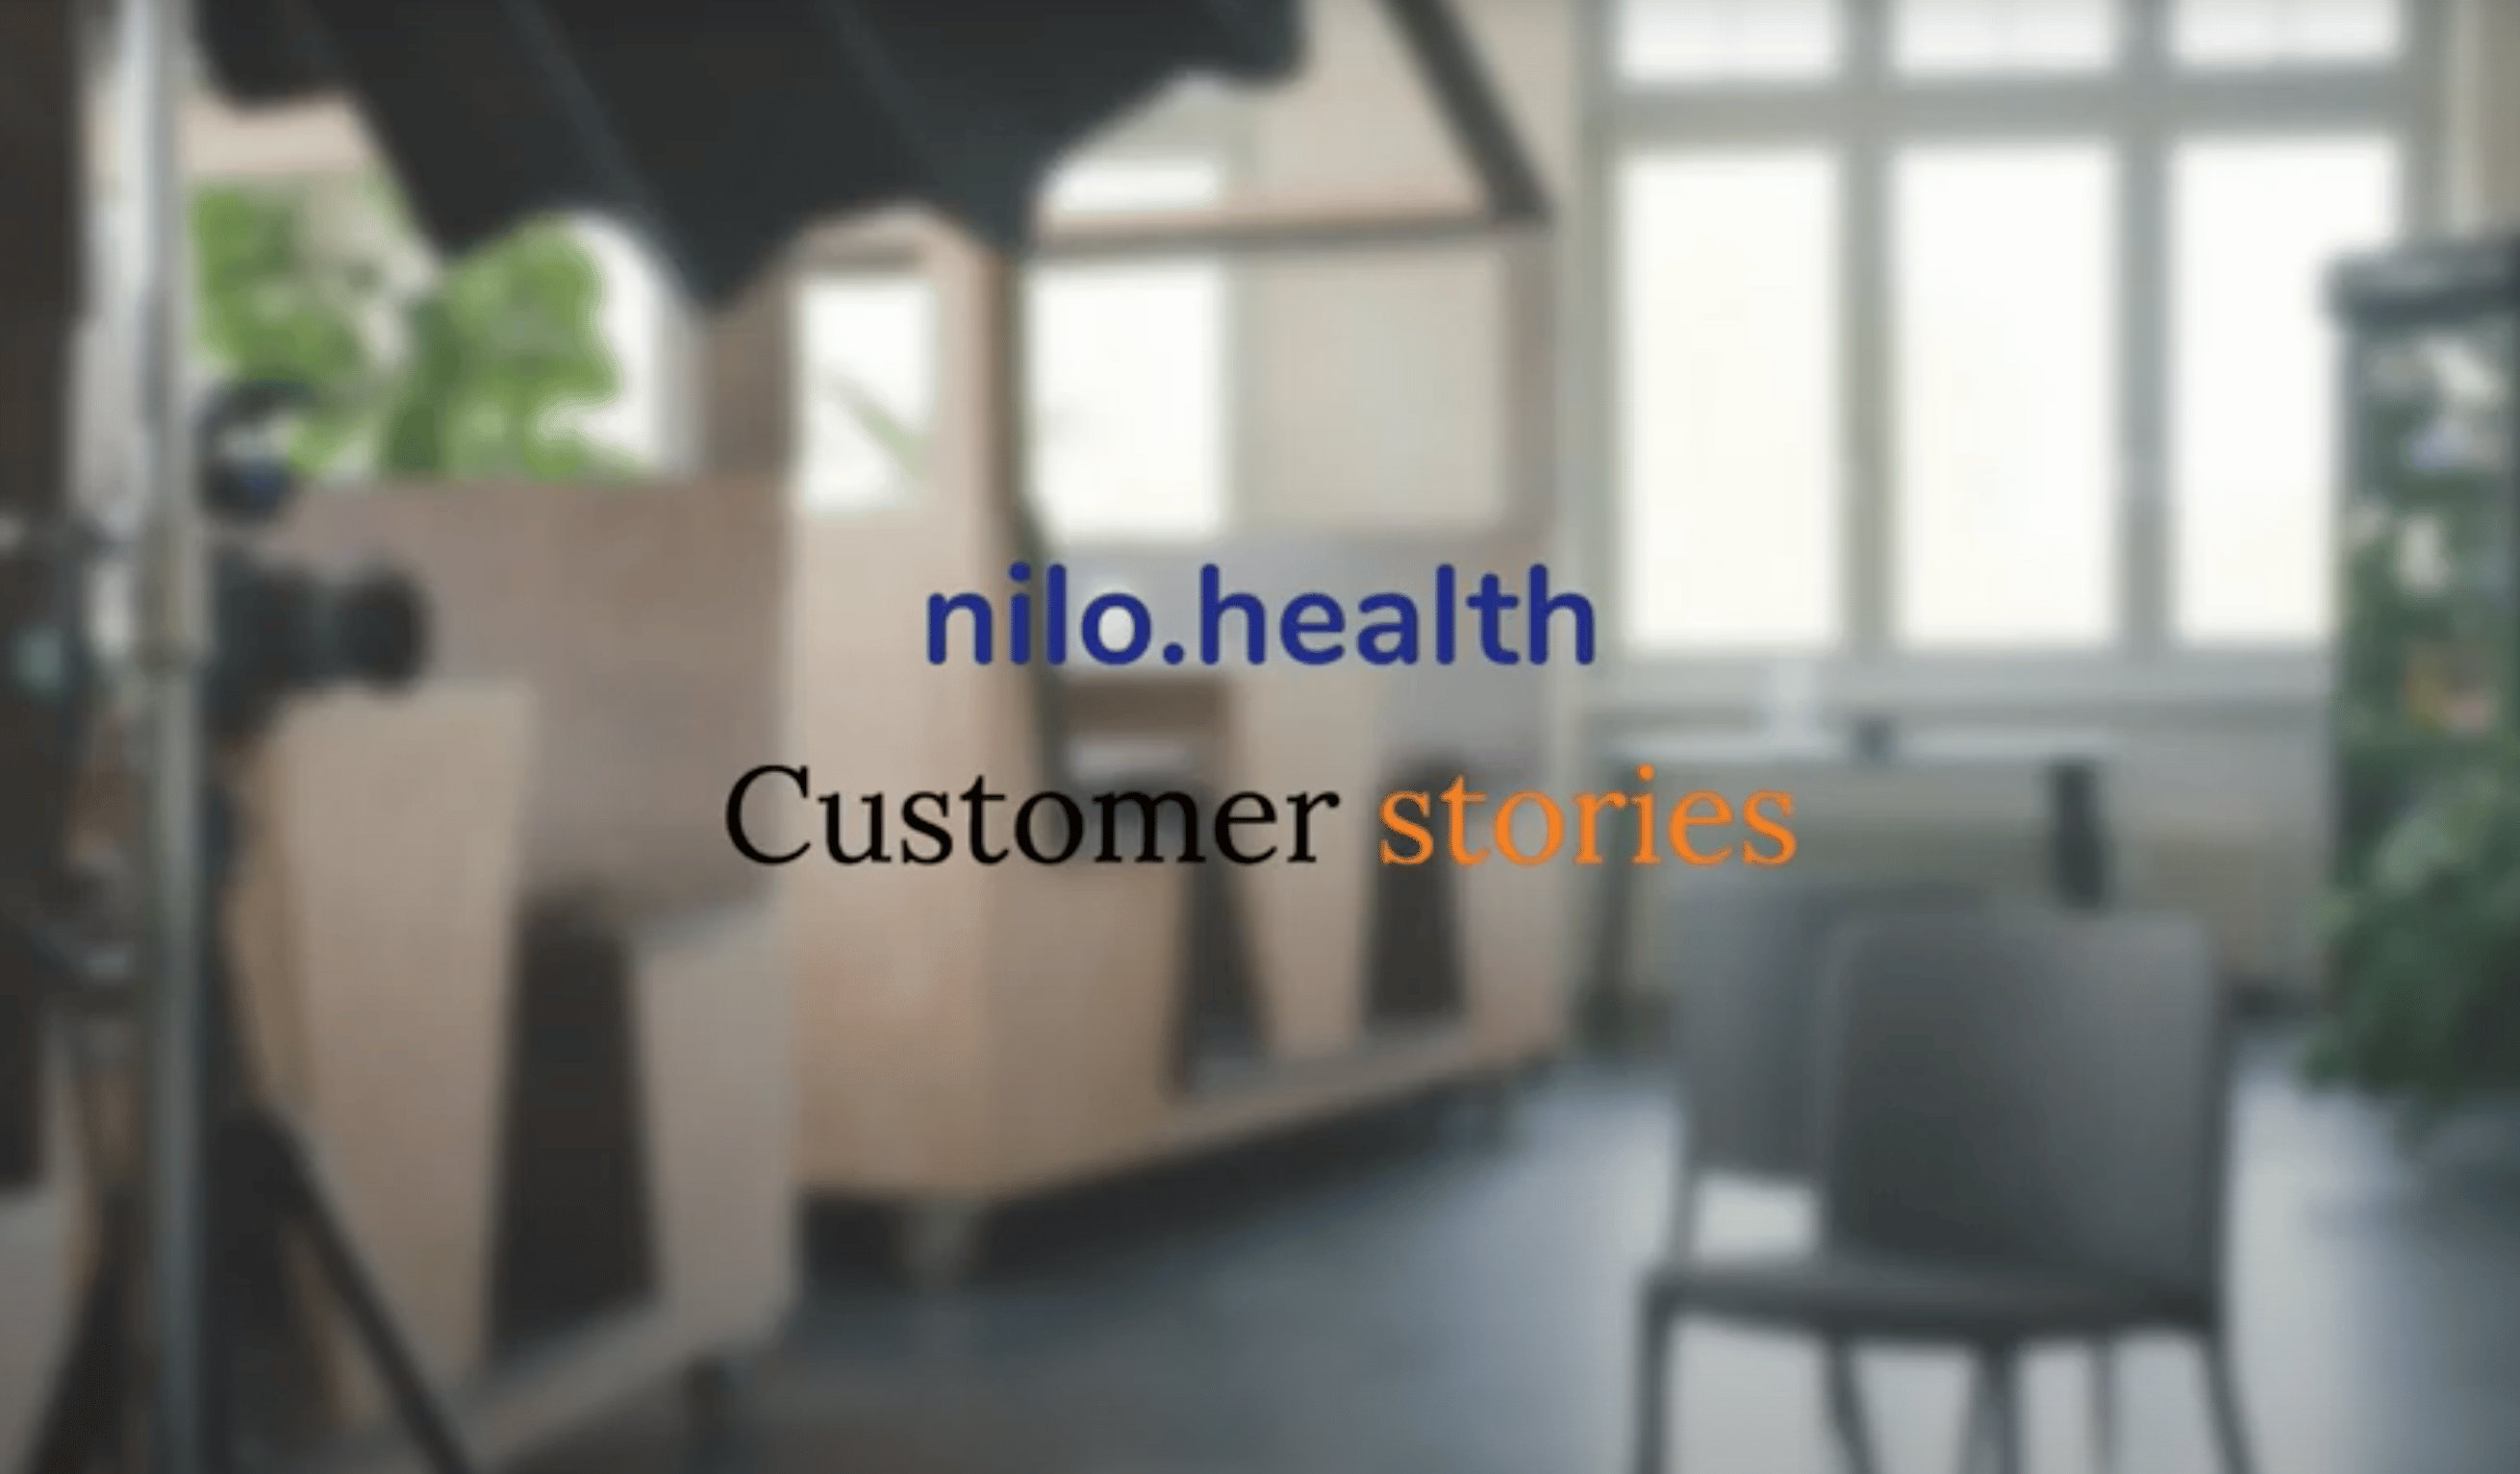 nilo.health customer stories – CareerFoundry